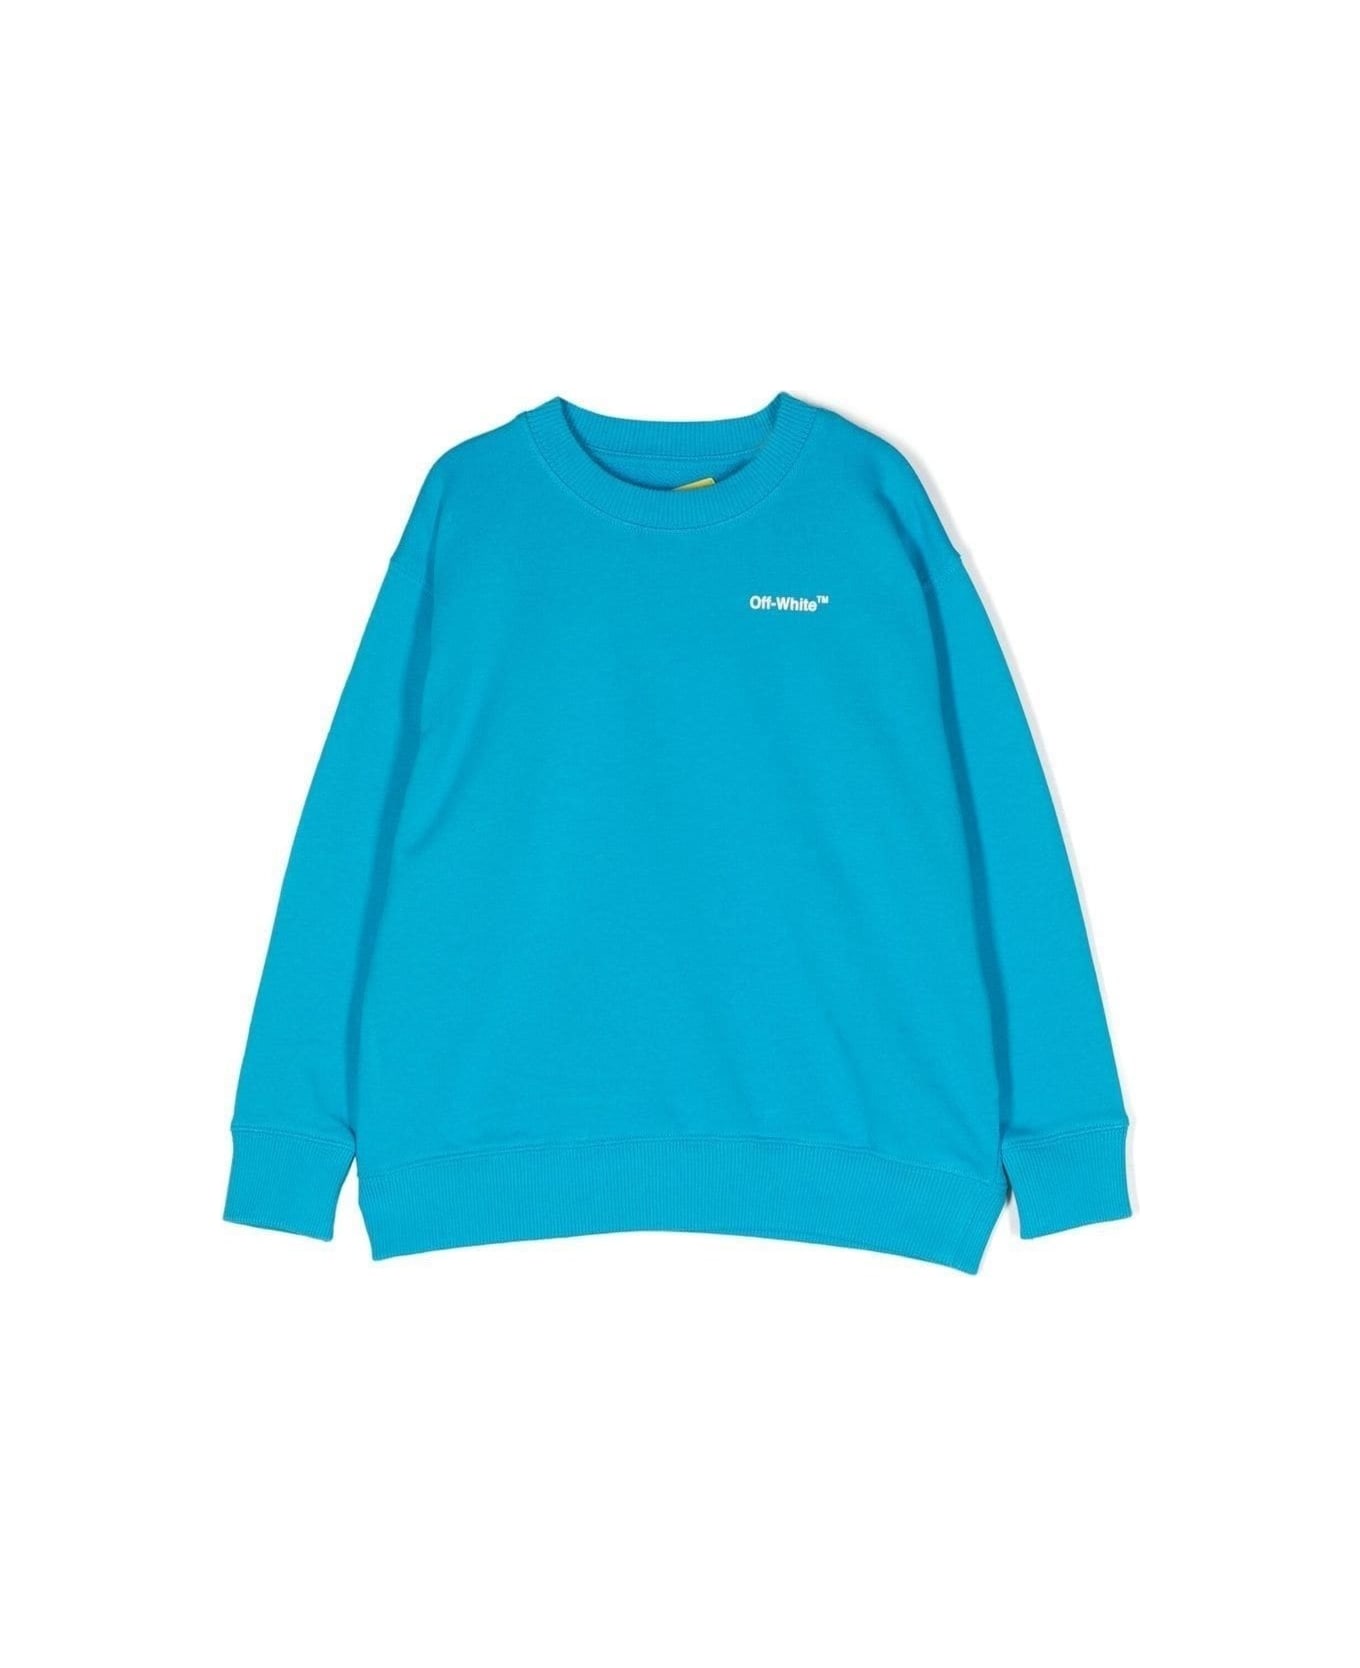 Off-White Crewneck Sweatshirt With Logo And Signature Arrow Print In Light-blue Cotton Boy - Light blue